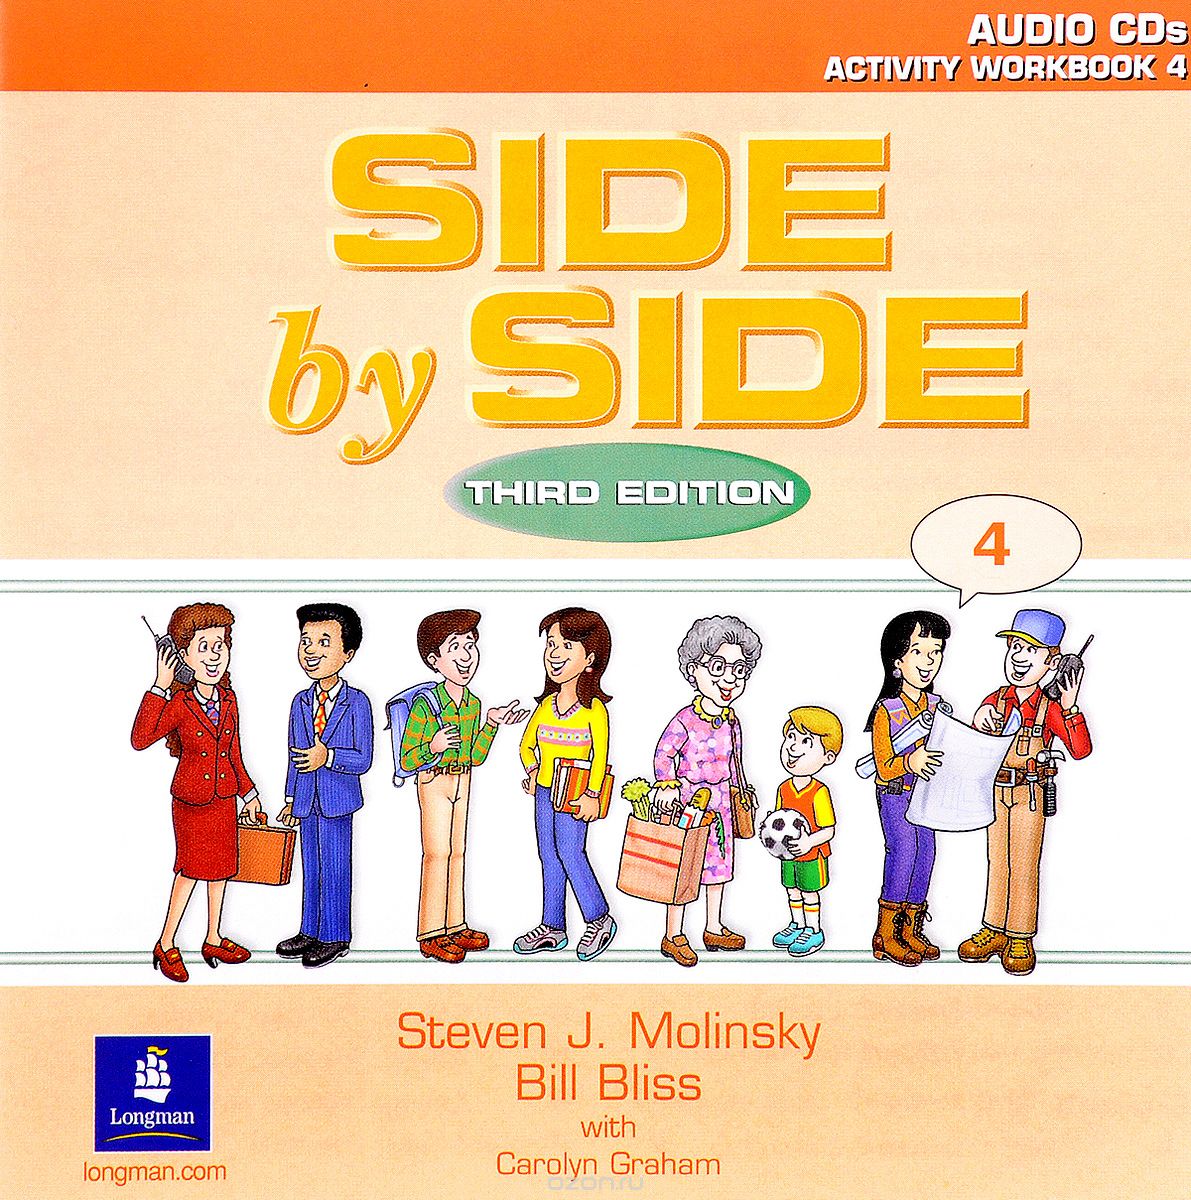 Скачать книгу "Side by Side 4: Activity Workbook 4 (аудиокнига на 2 CD)"